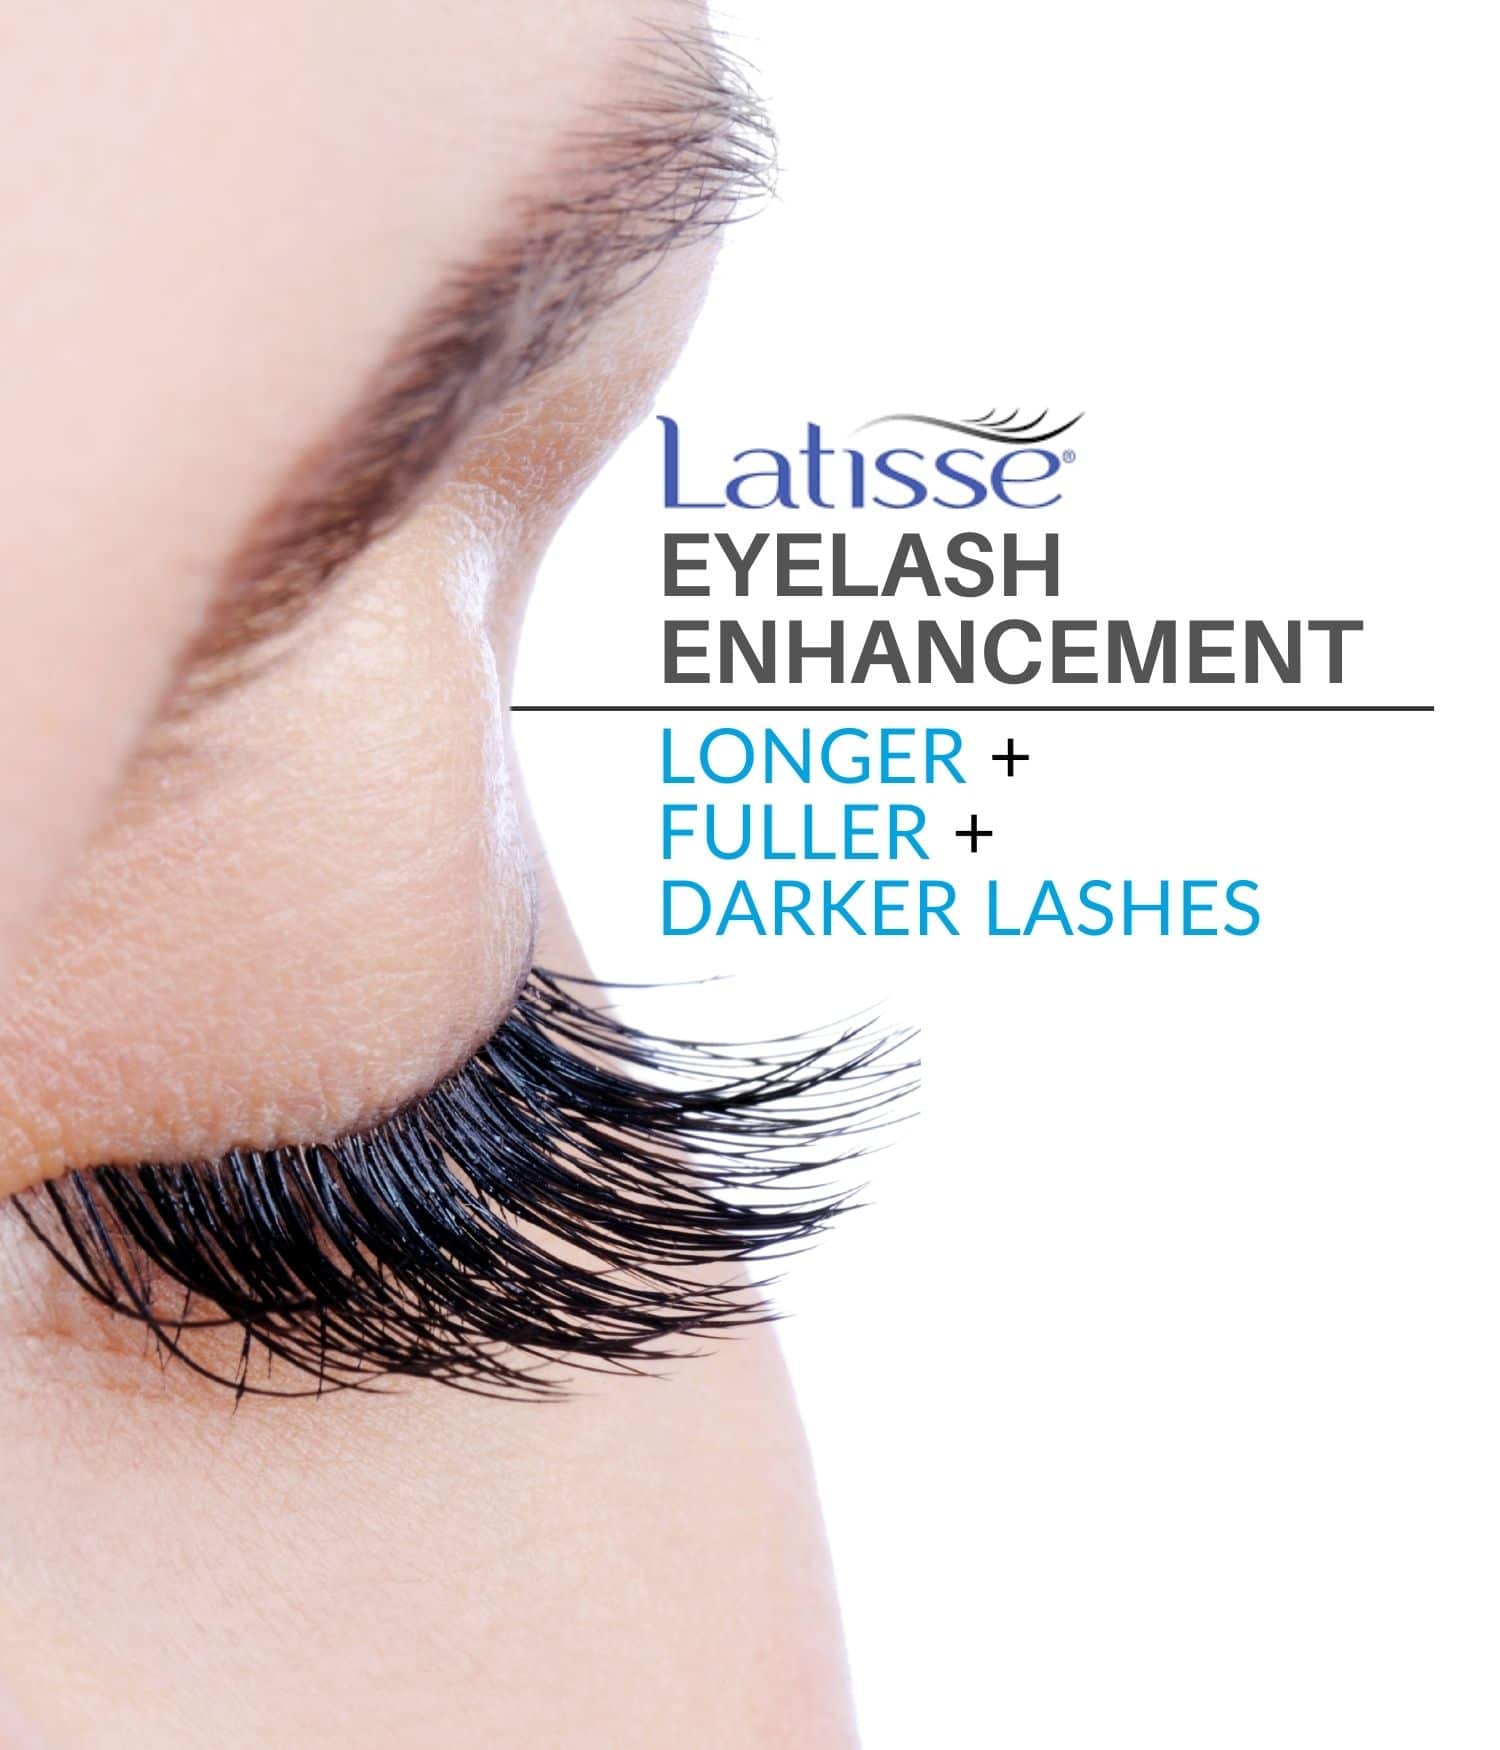 Woman's eyelash with Latisse eyelash enhancement.